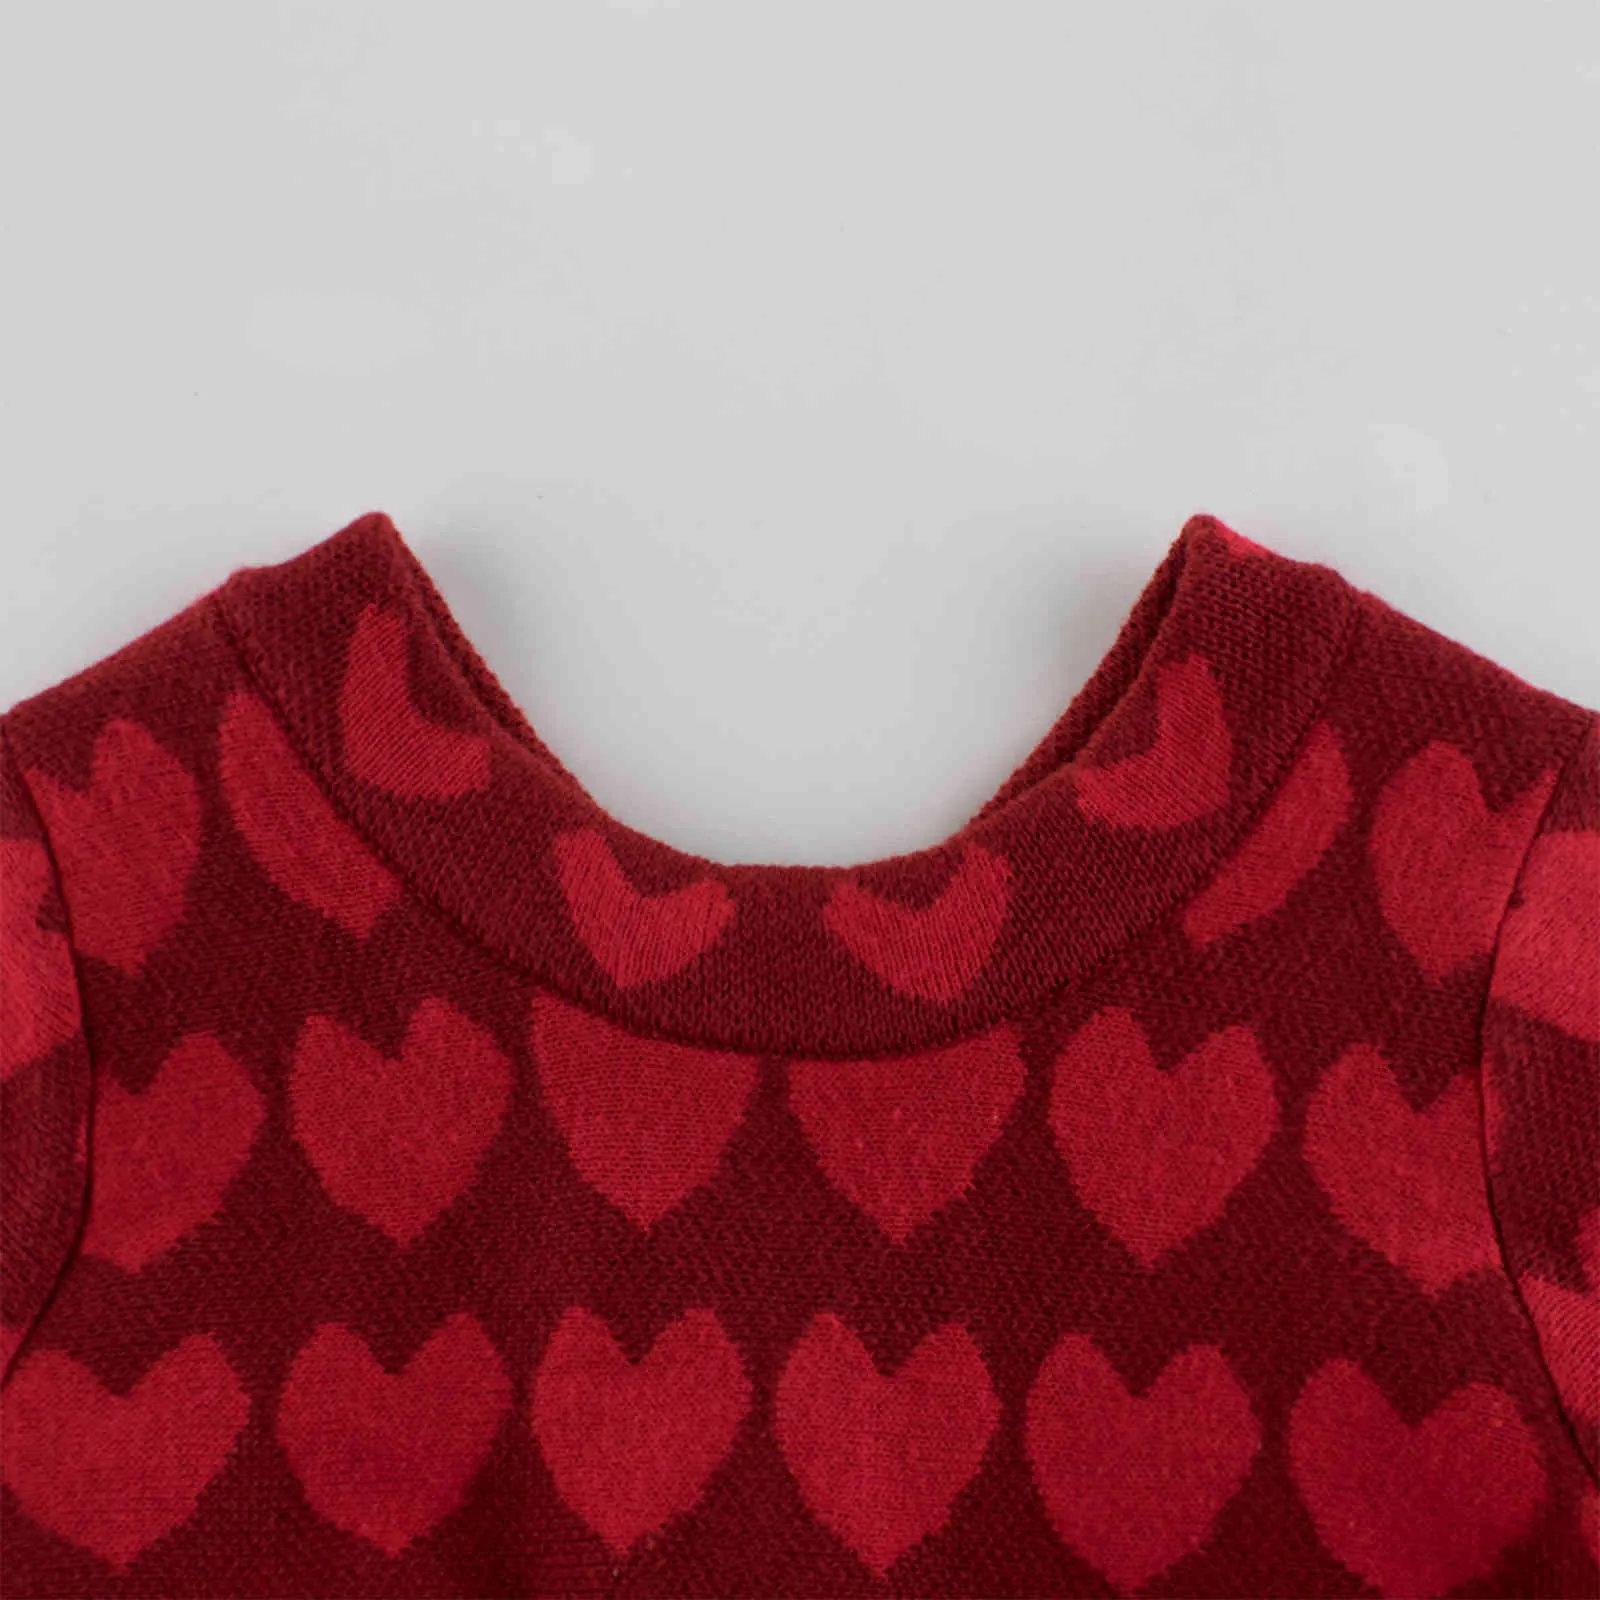 1-7Y秋冬の子供子供の赤ちゃん女の子赤いドレスハートプリント長袖のドレスのバレンタインデーの衣装210515